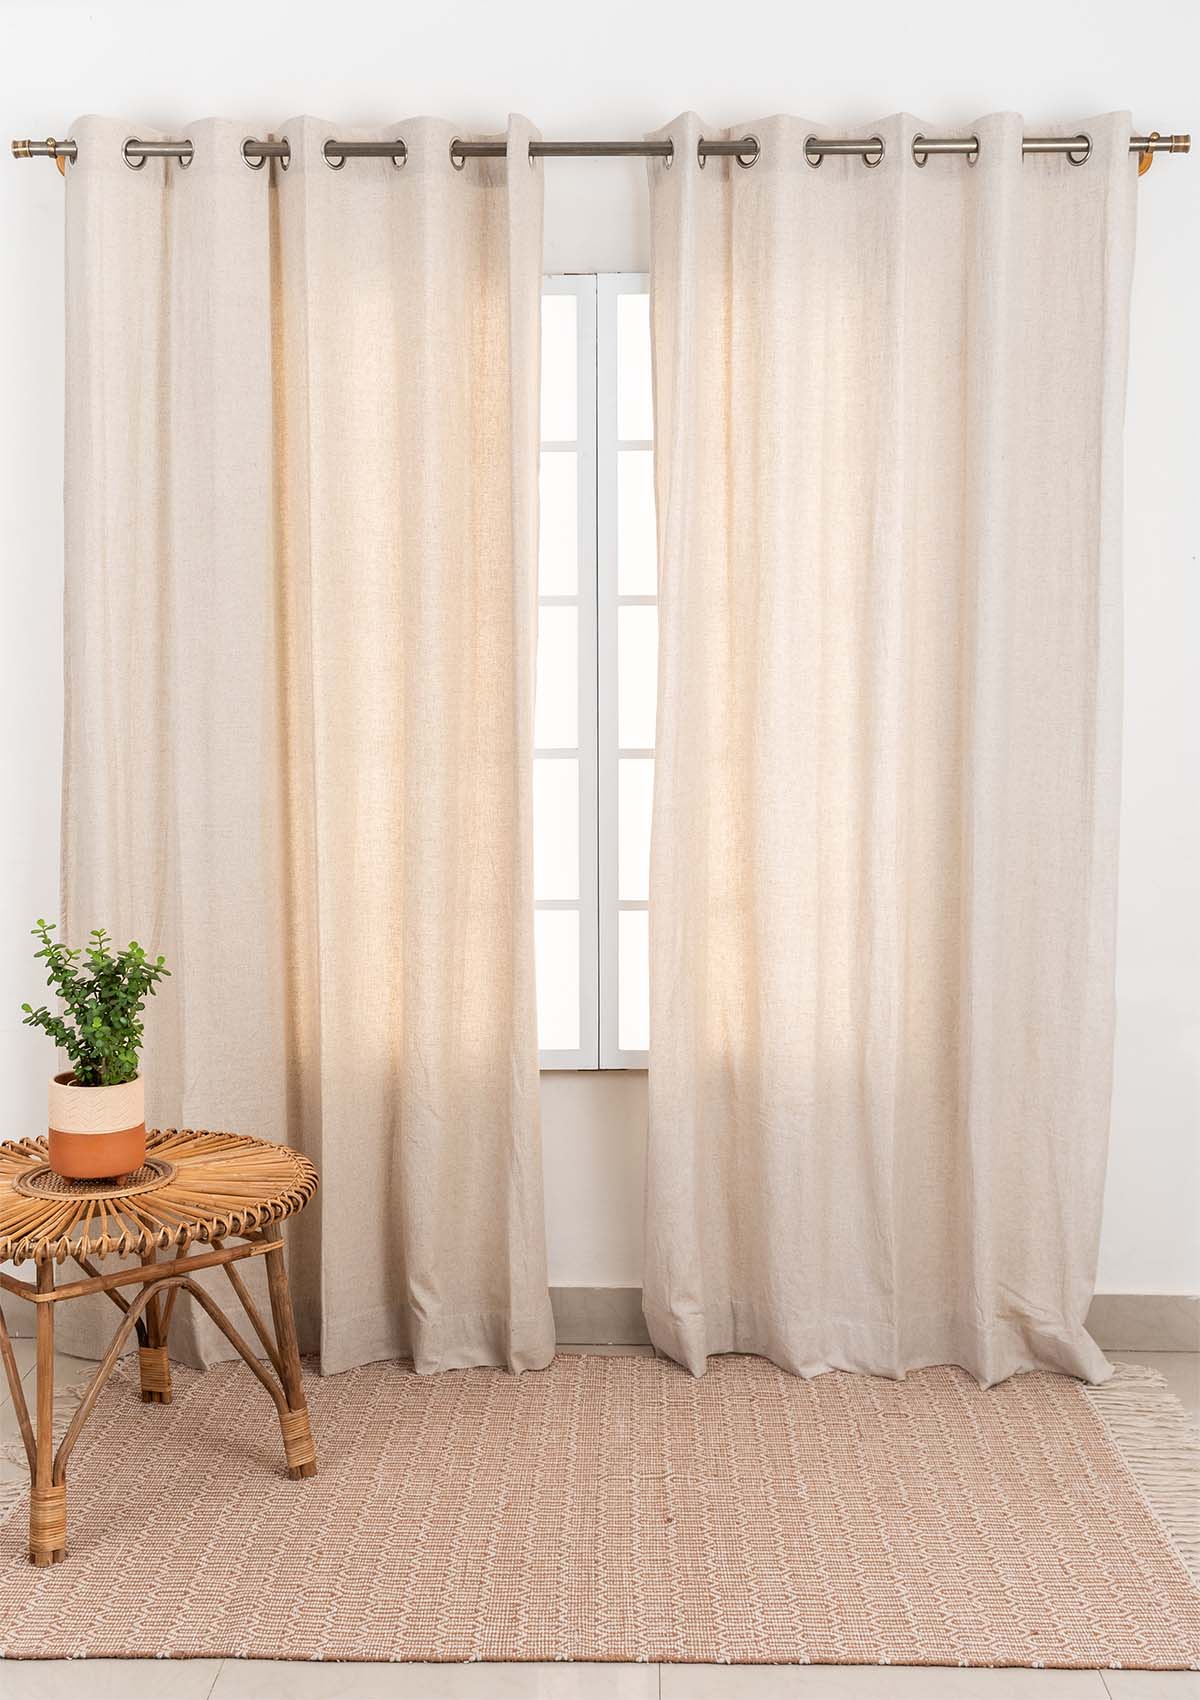 Solid linen Beige 100% Customizable Cotton plain curtain for bedroom - Room darkening